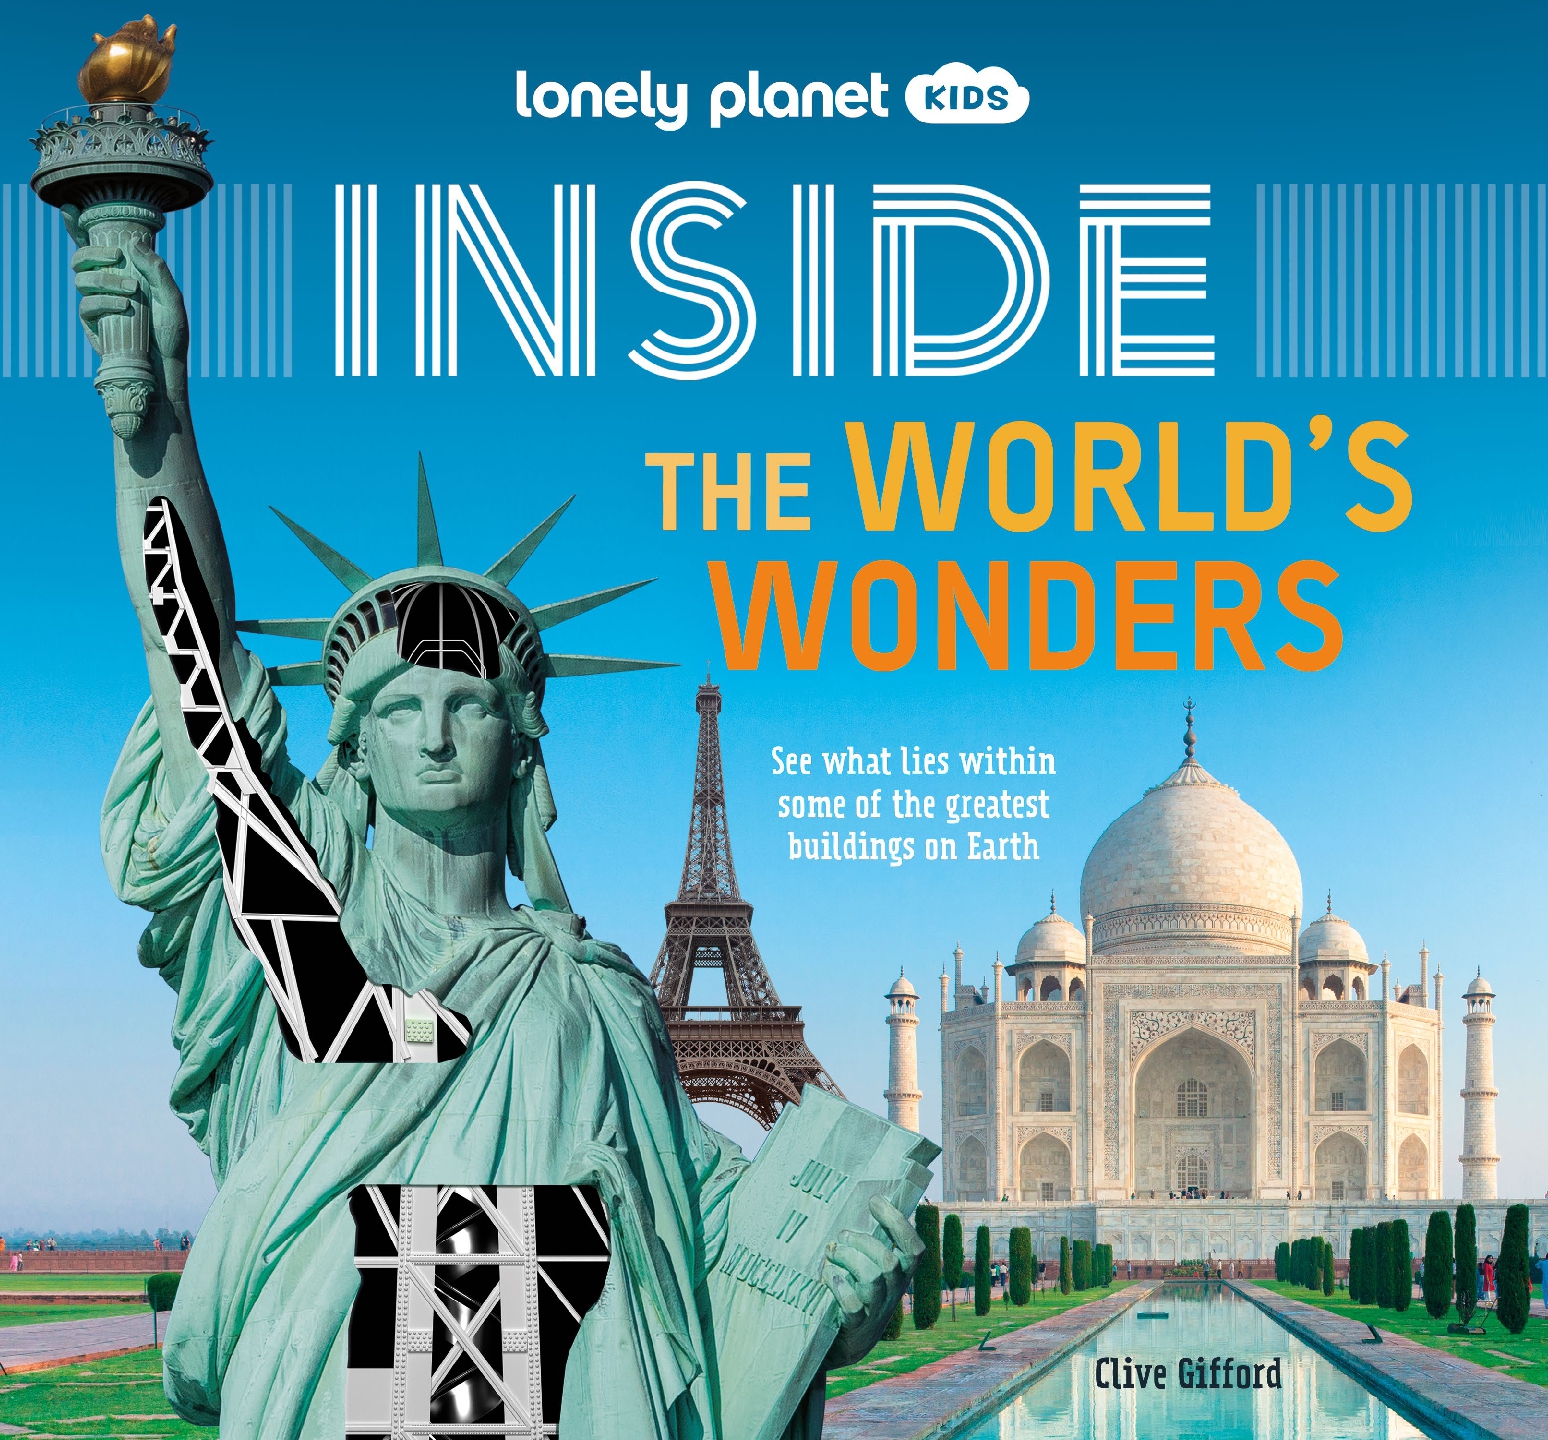 Inside - The World's Wonders 1